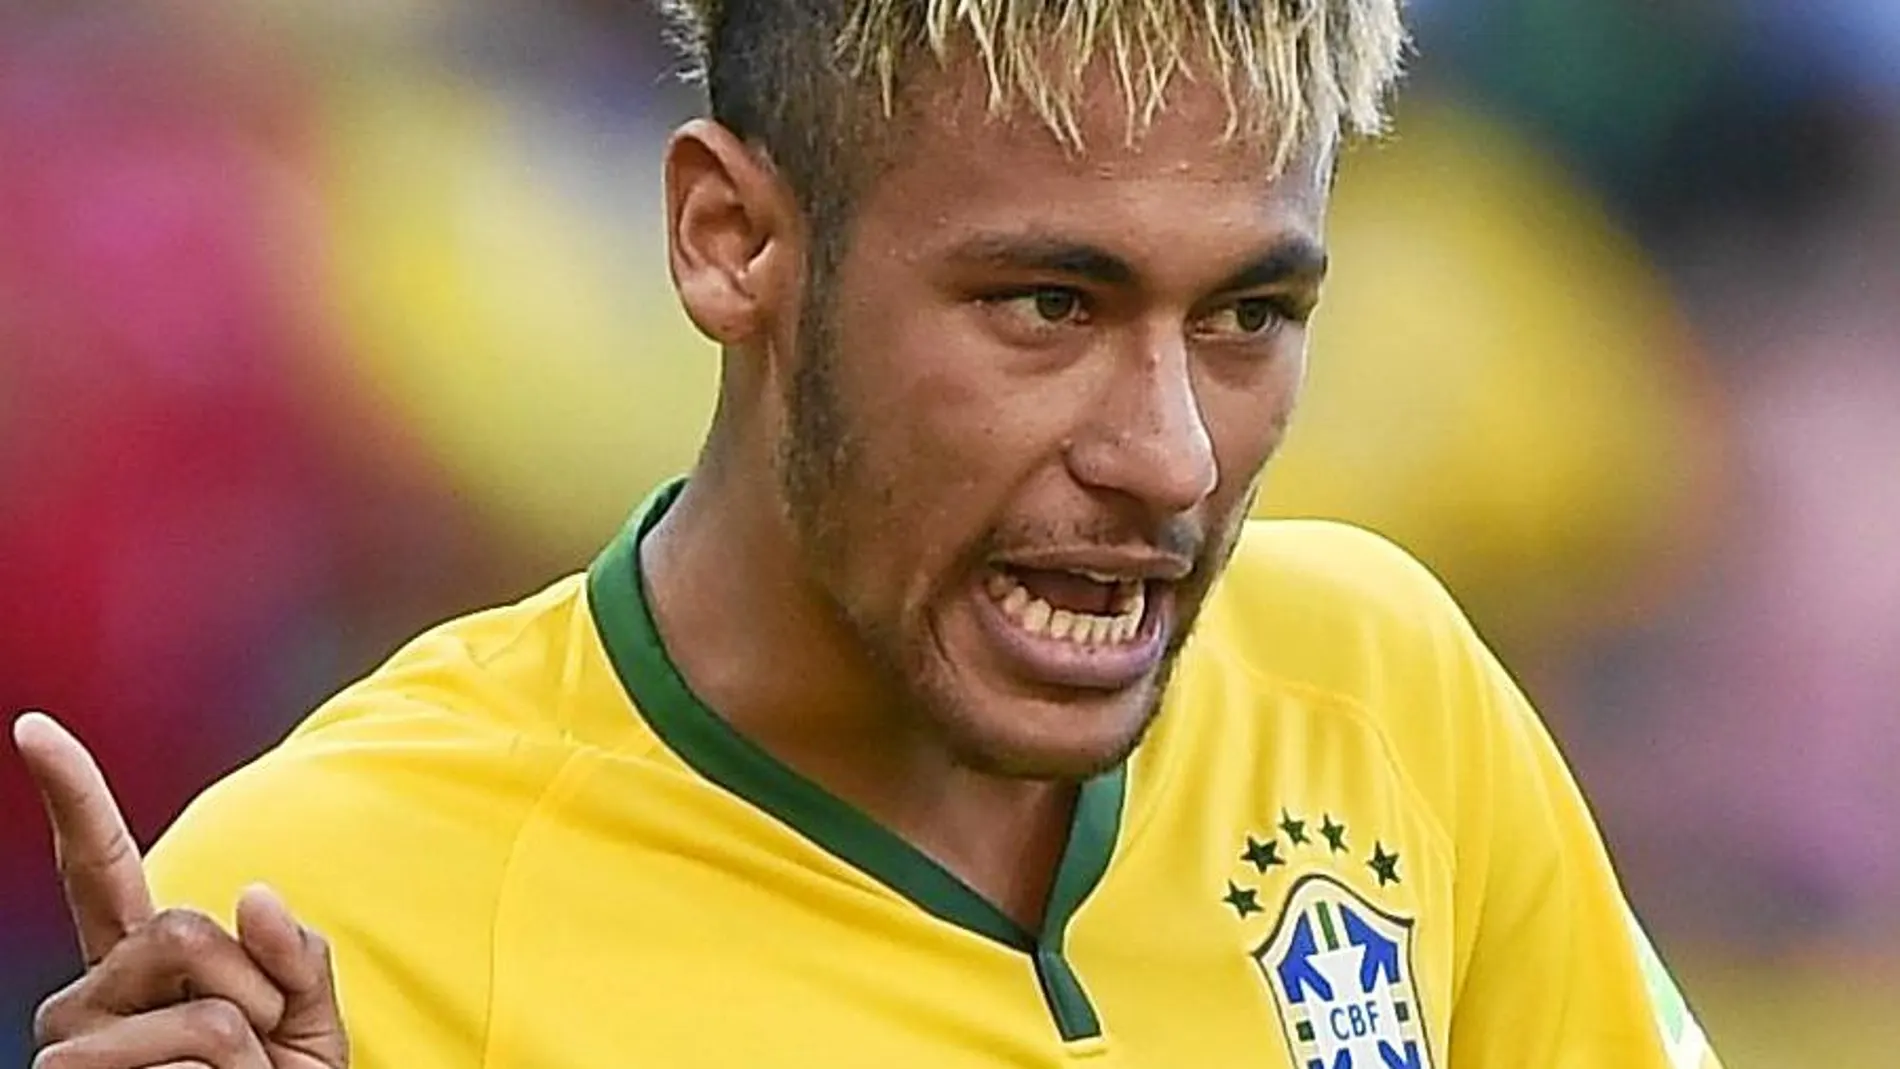 Cara a cara: ¿Brasil es sólo Neymar?